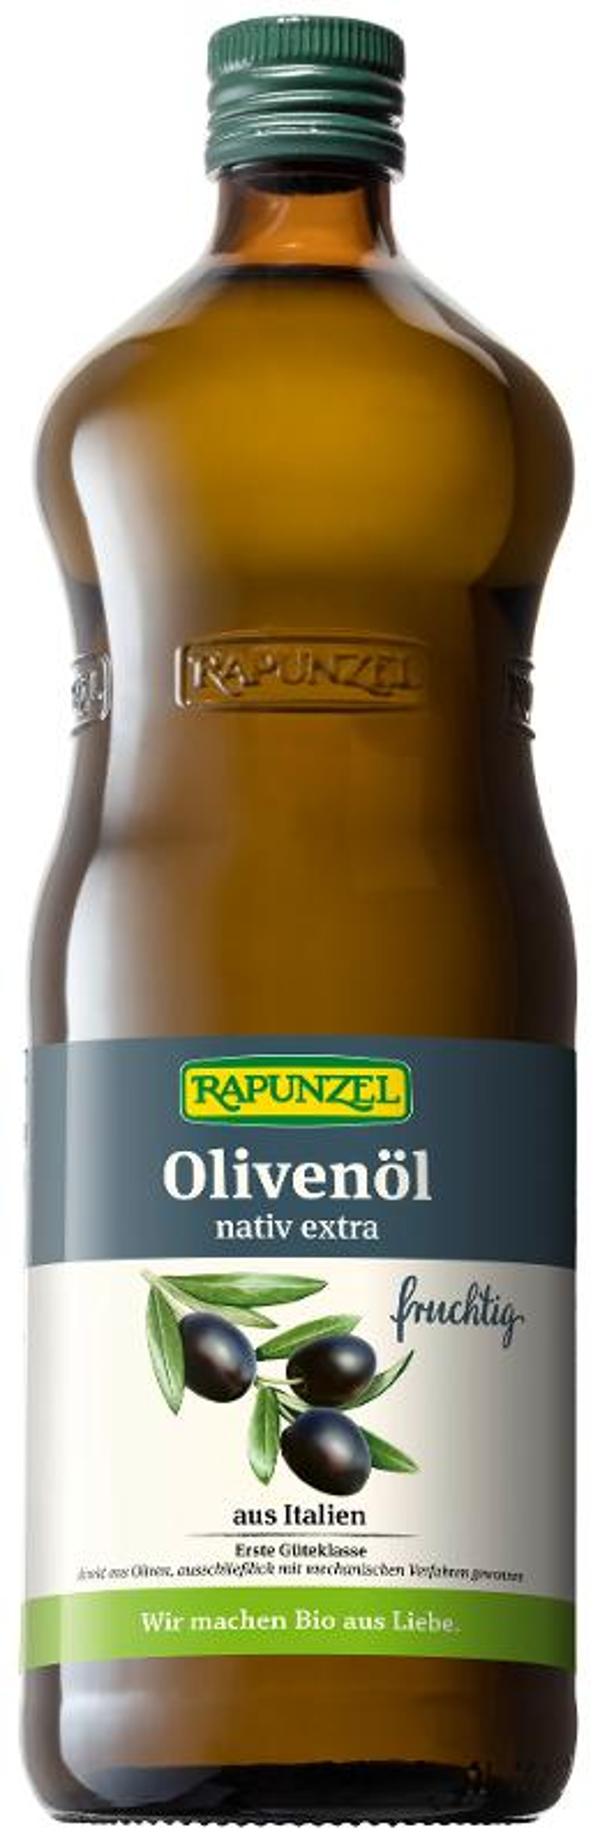 Produktfoto zu Olivenöl fruchtig, 1 l